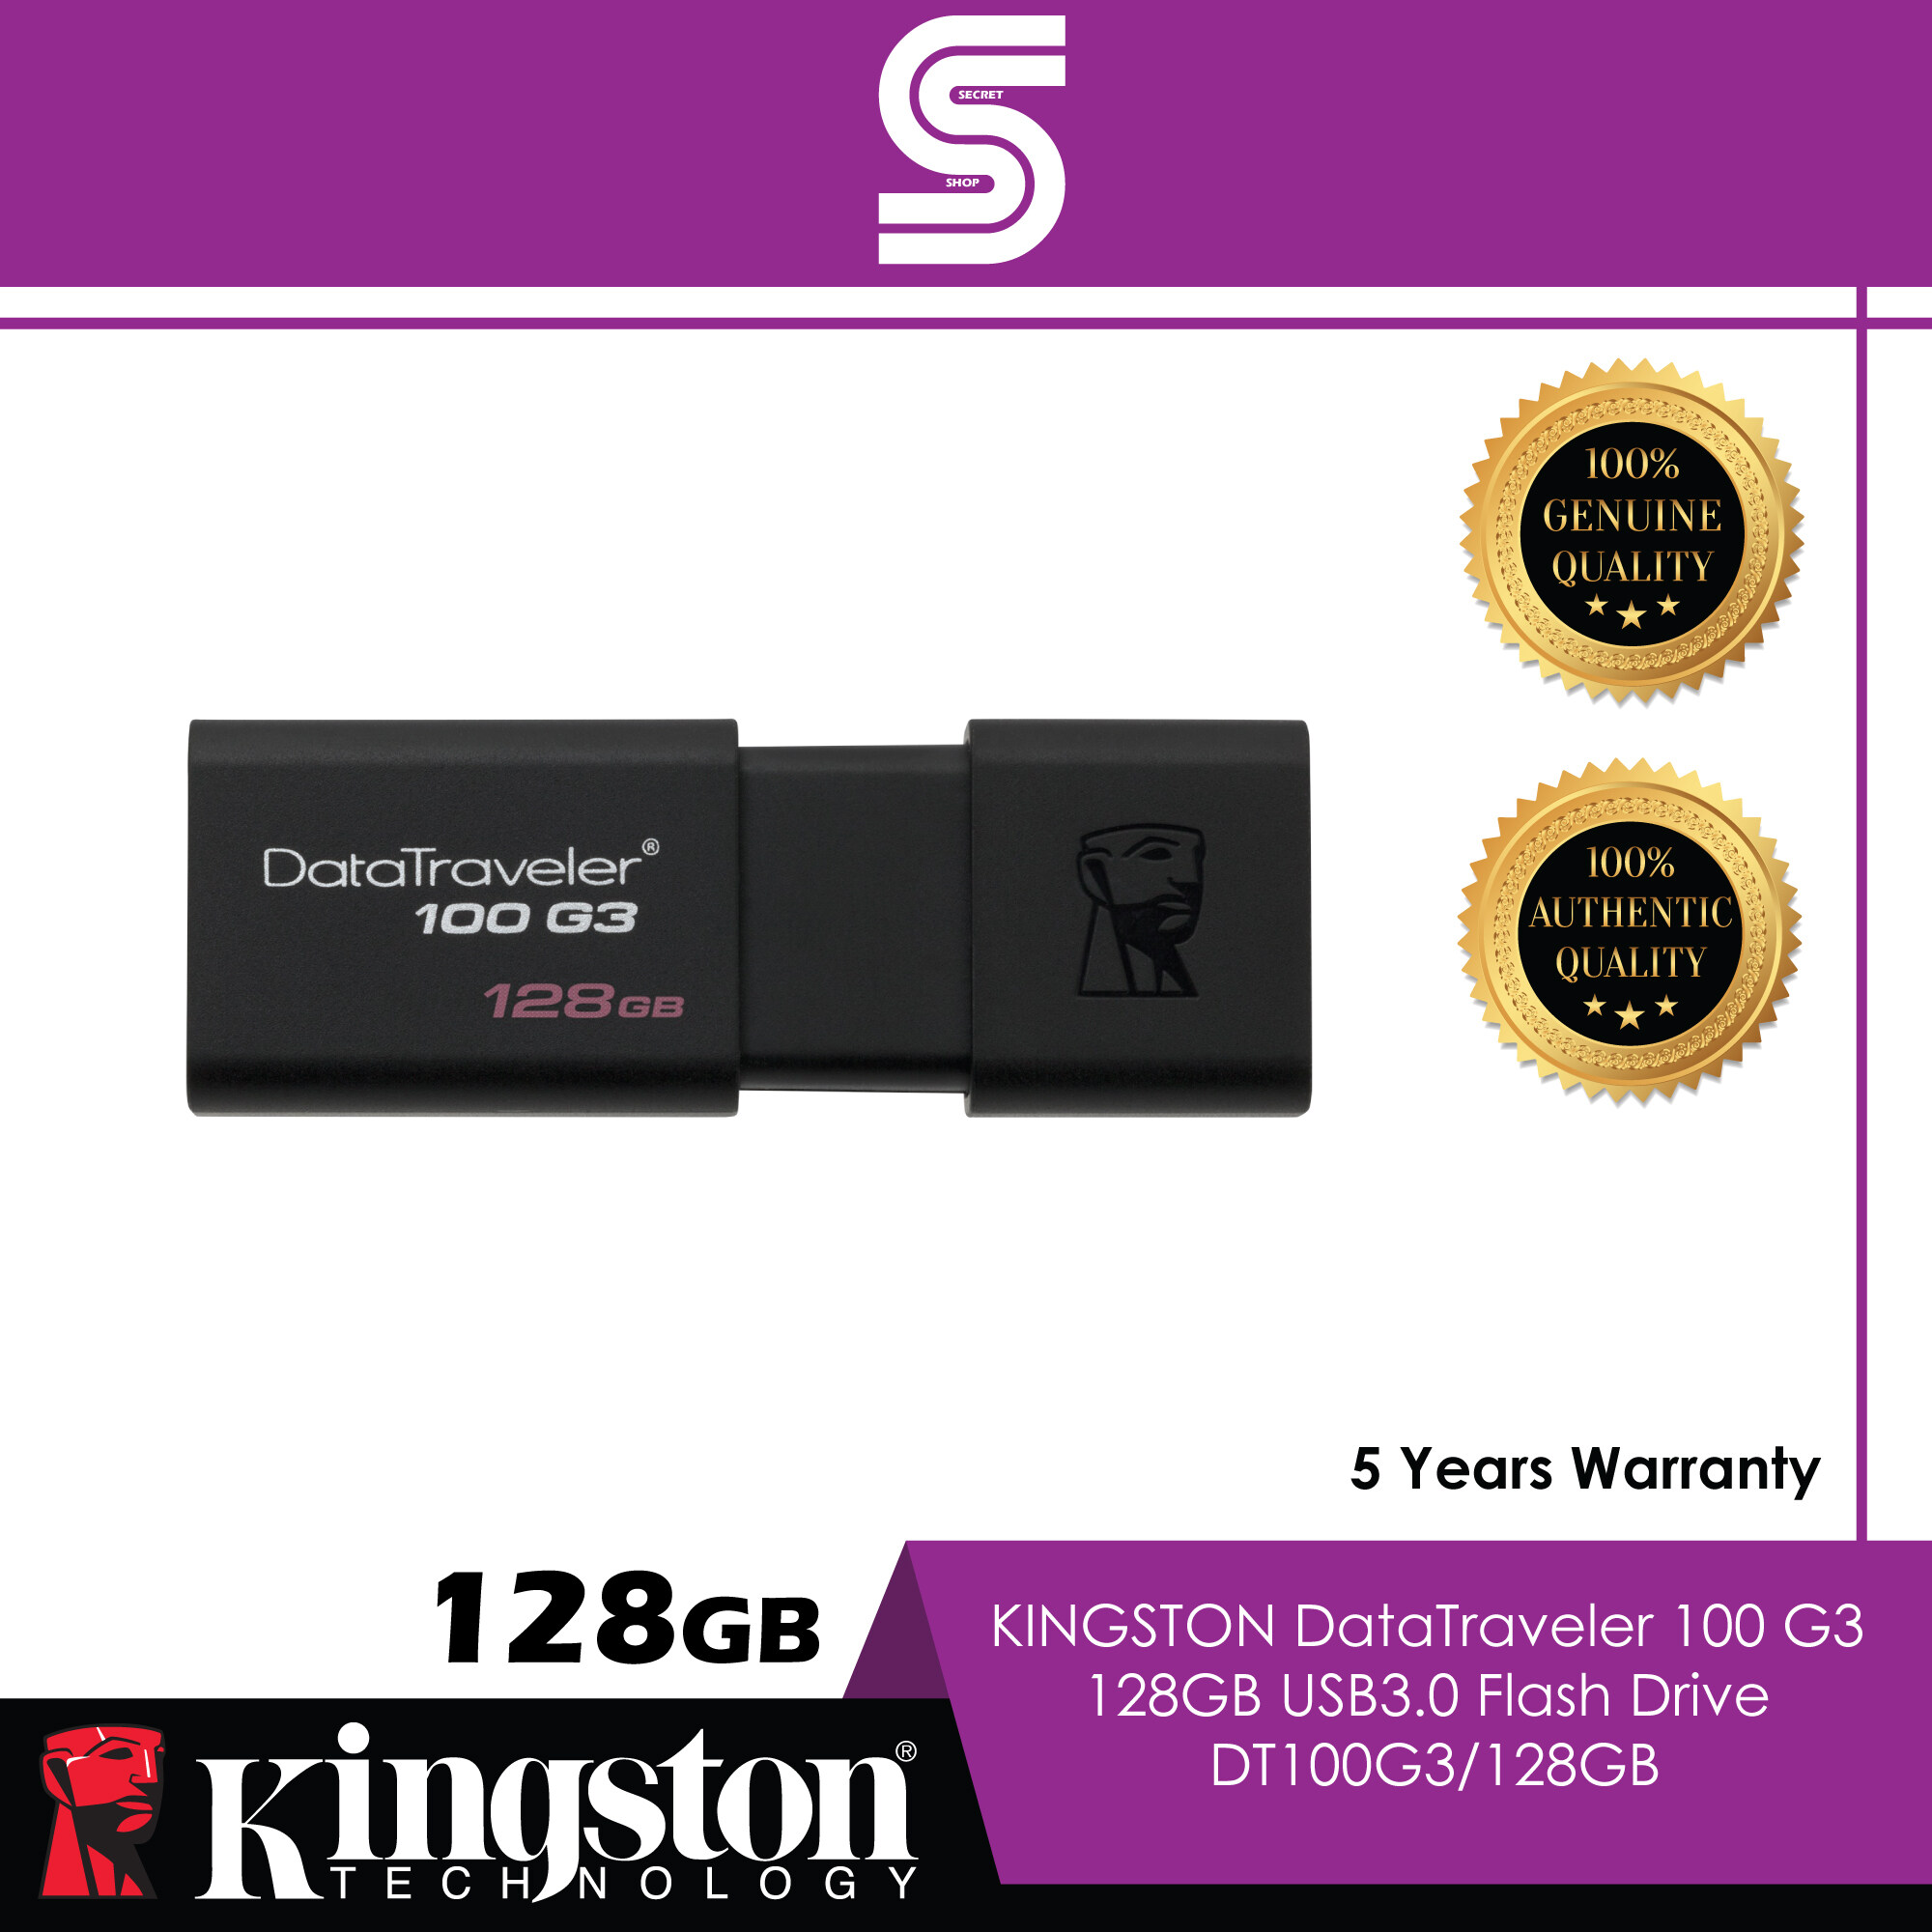 Kingston DataTraveler 100 G3 128GB USB3.0 Flash Drive - DT100G3/128GB